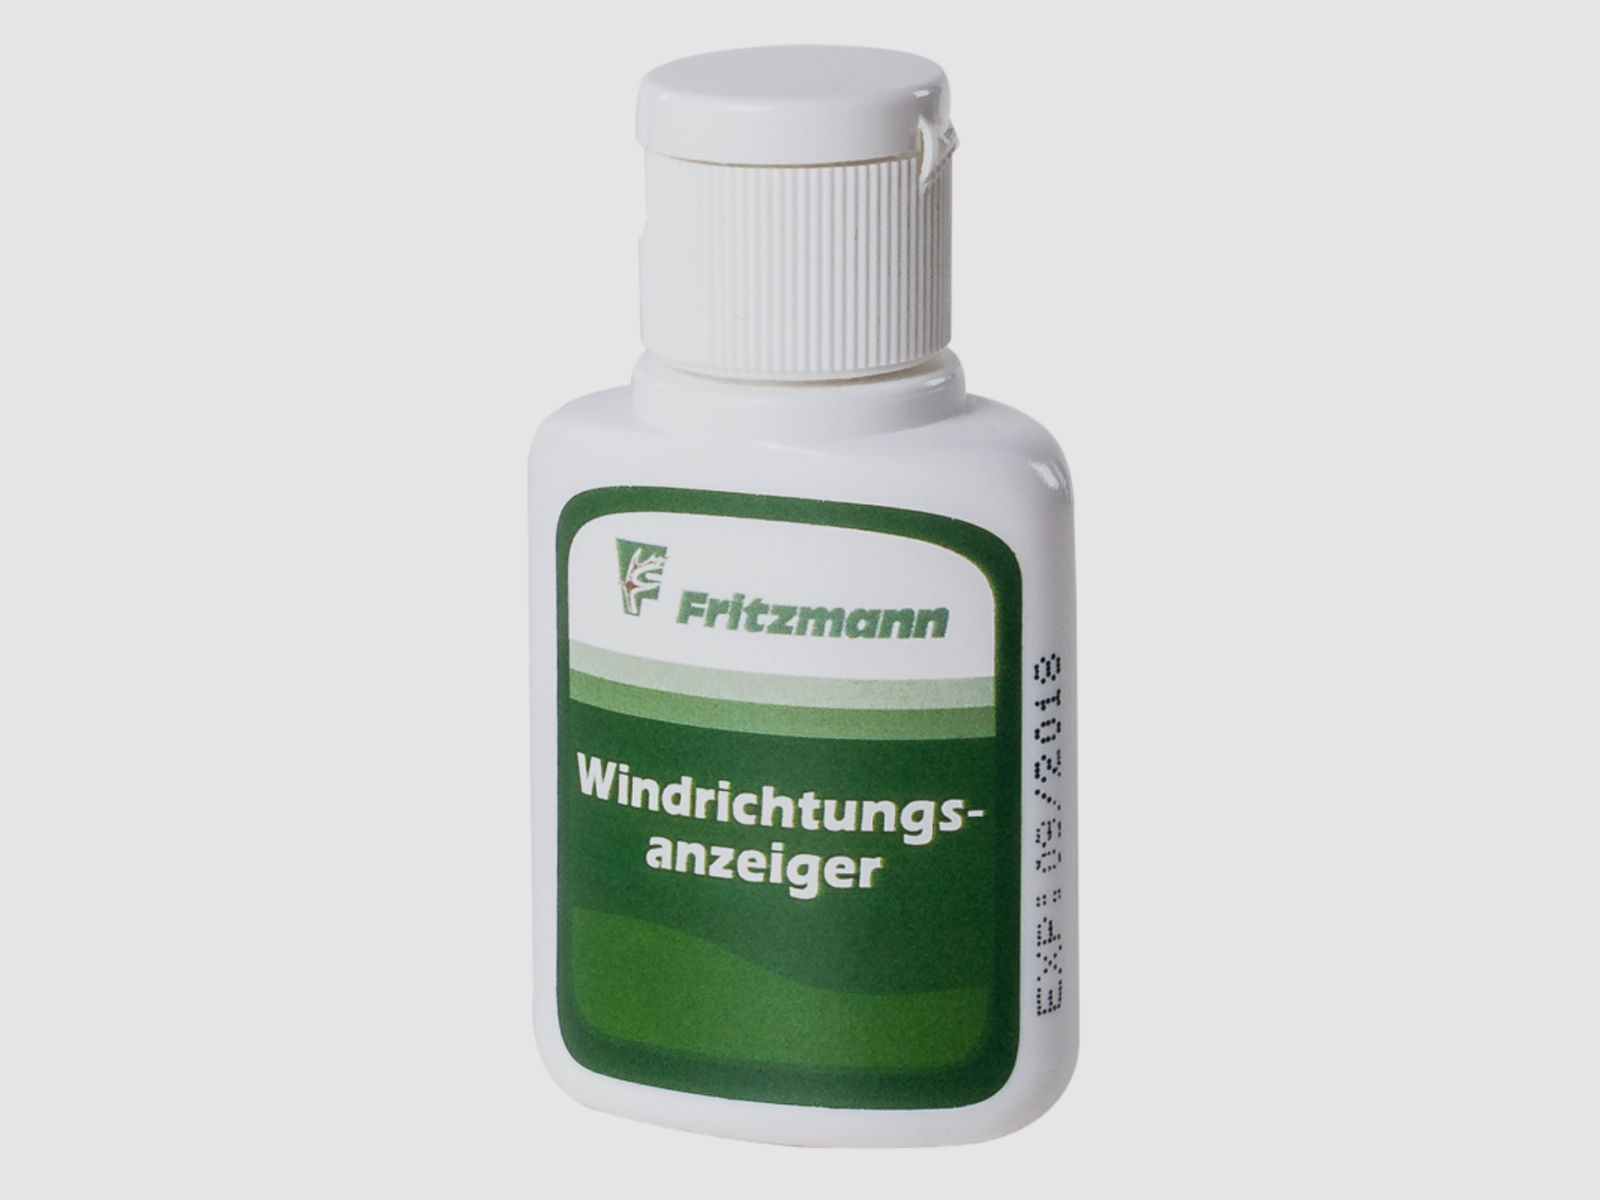 Fritzmann Windprüfer